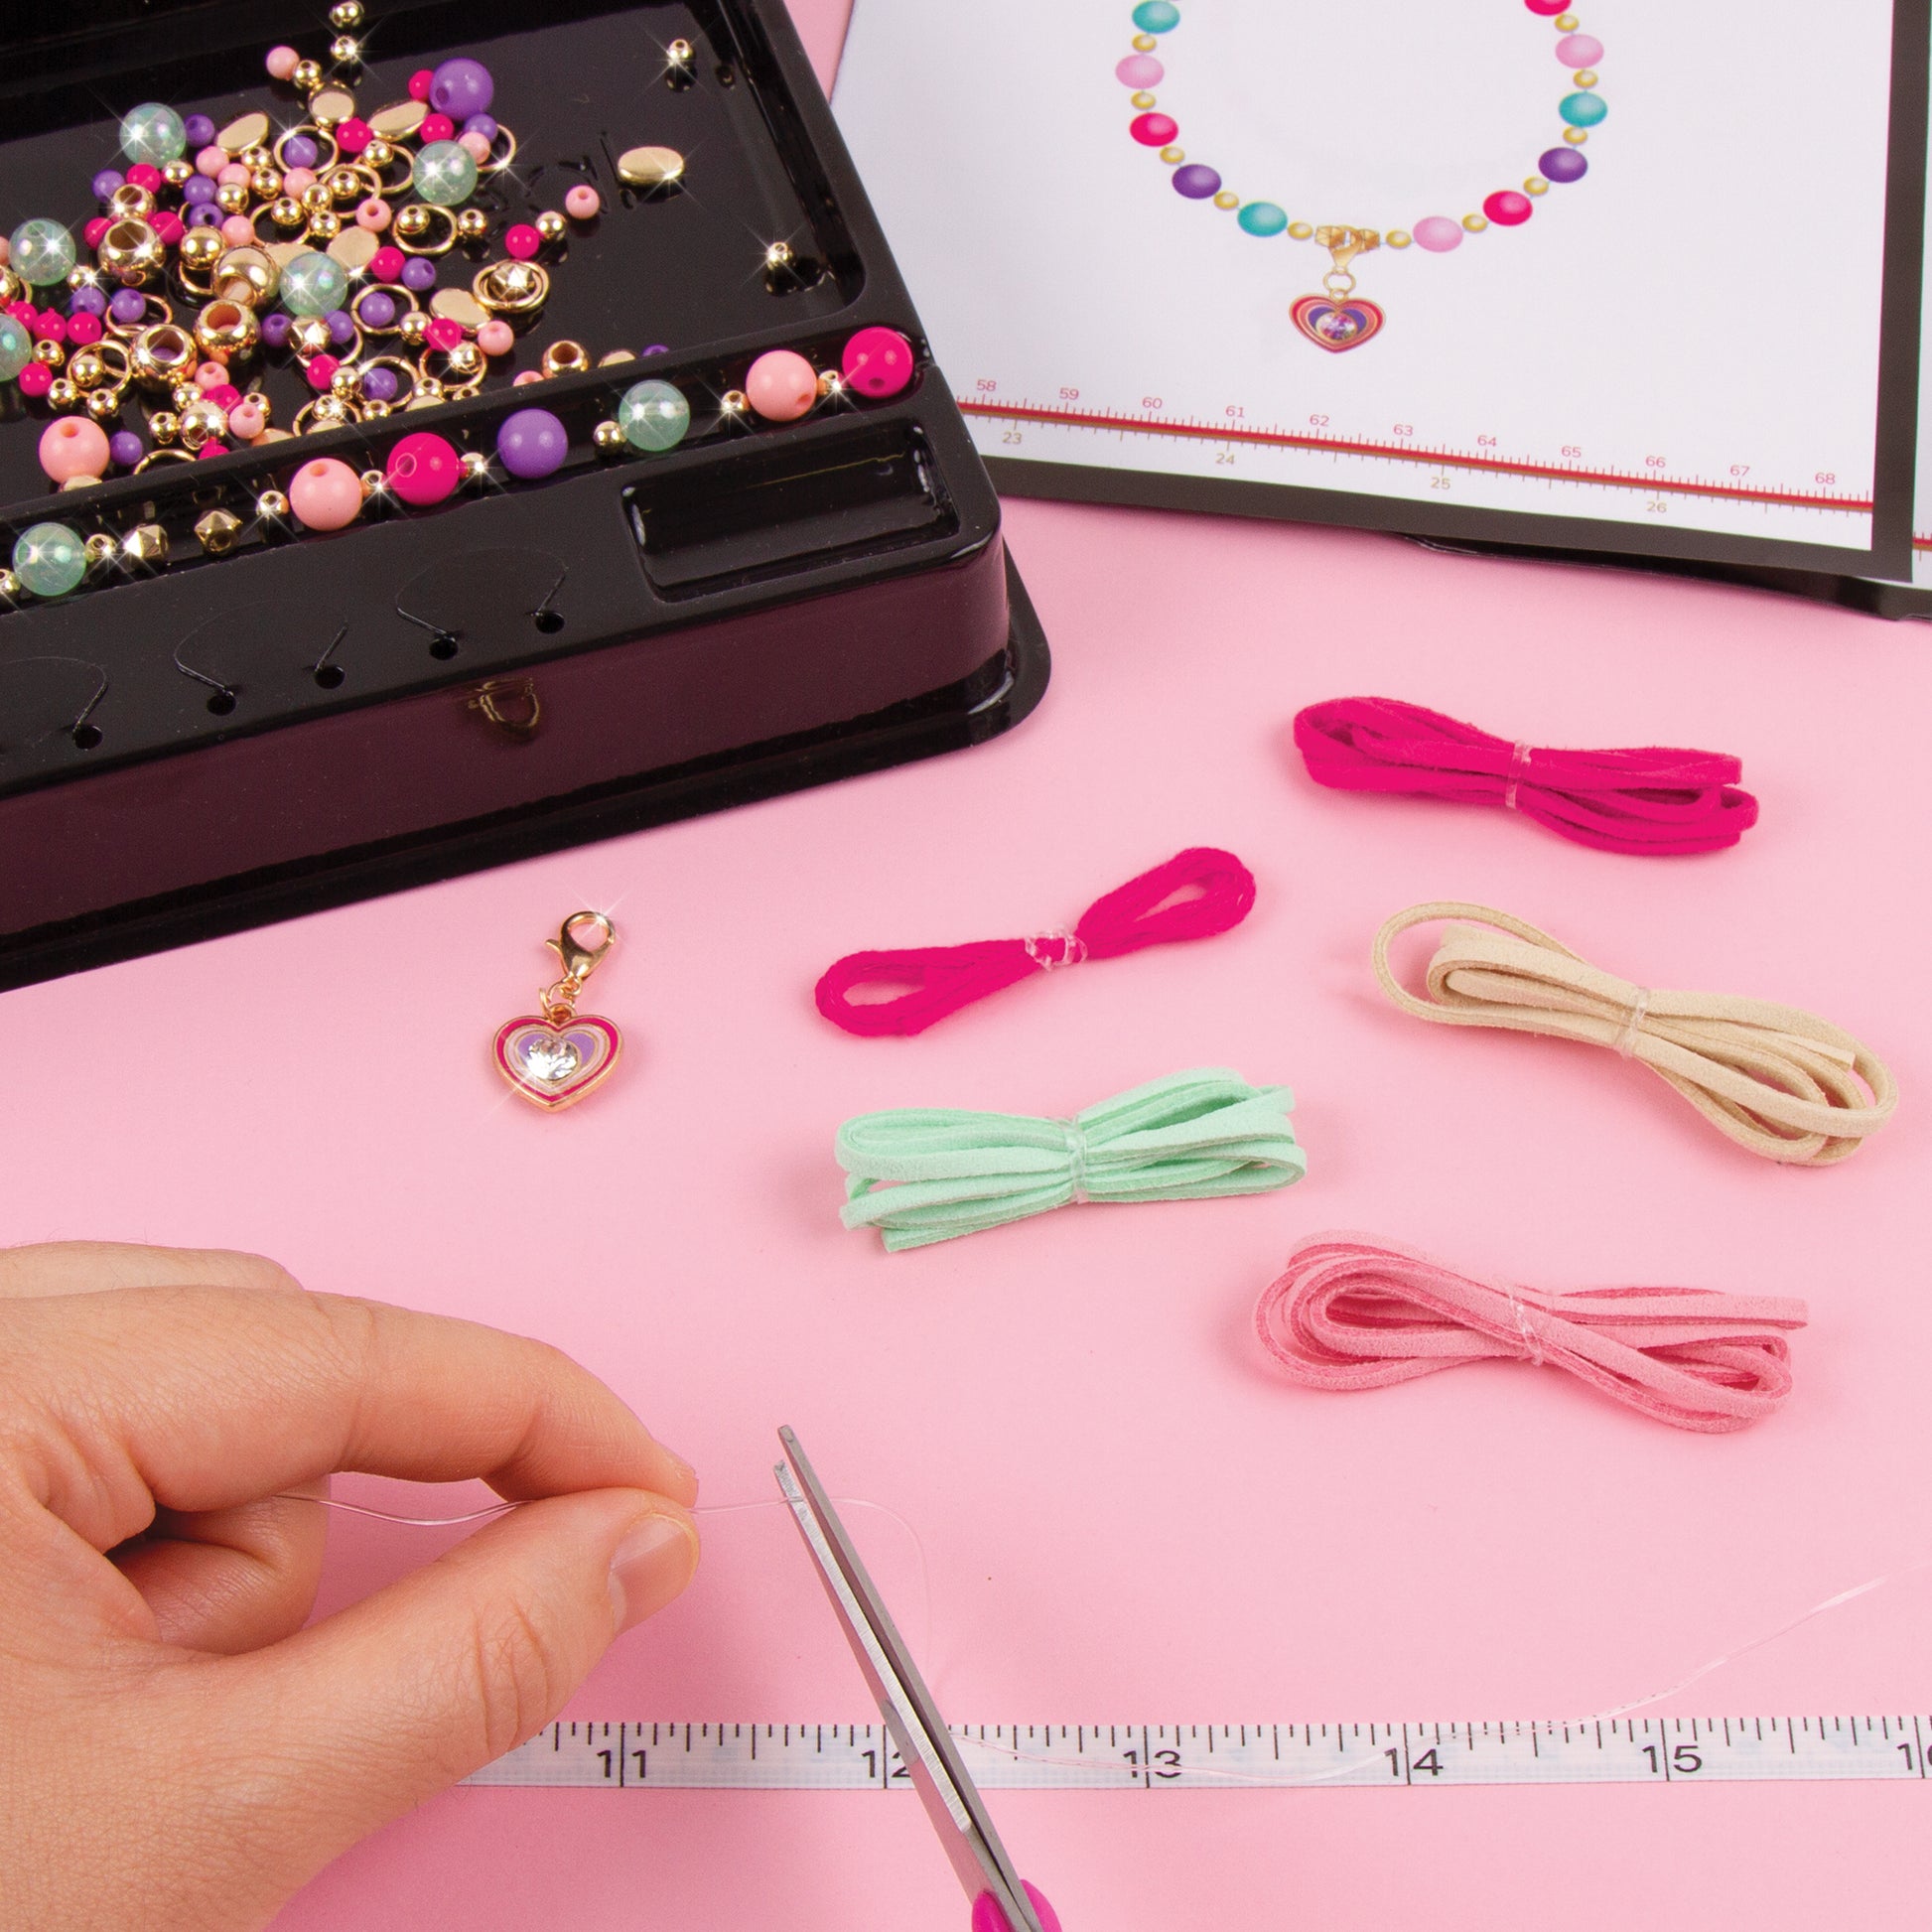 Mini Juicy Couture™ Crystal Sunshine Bracelets